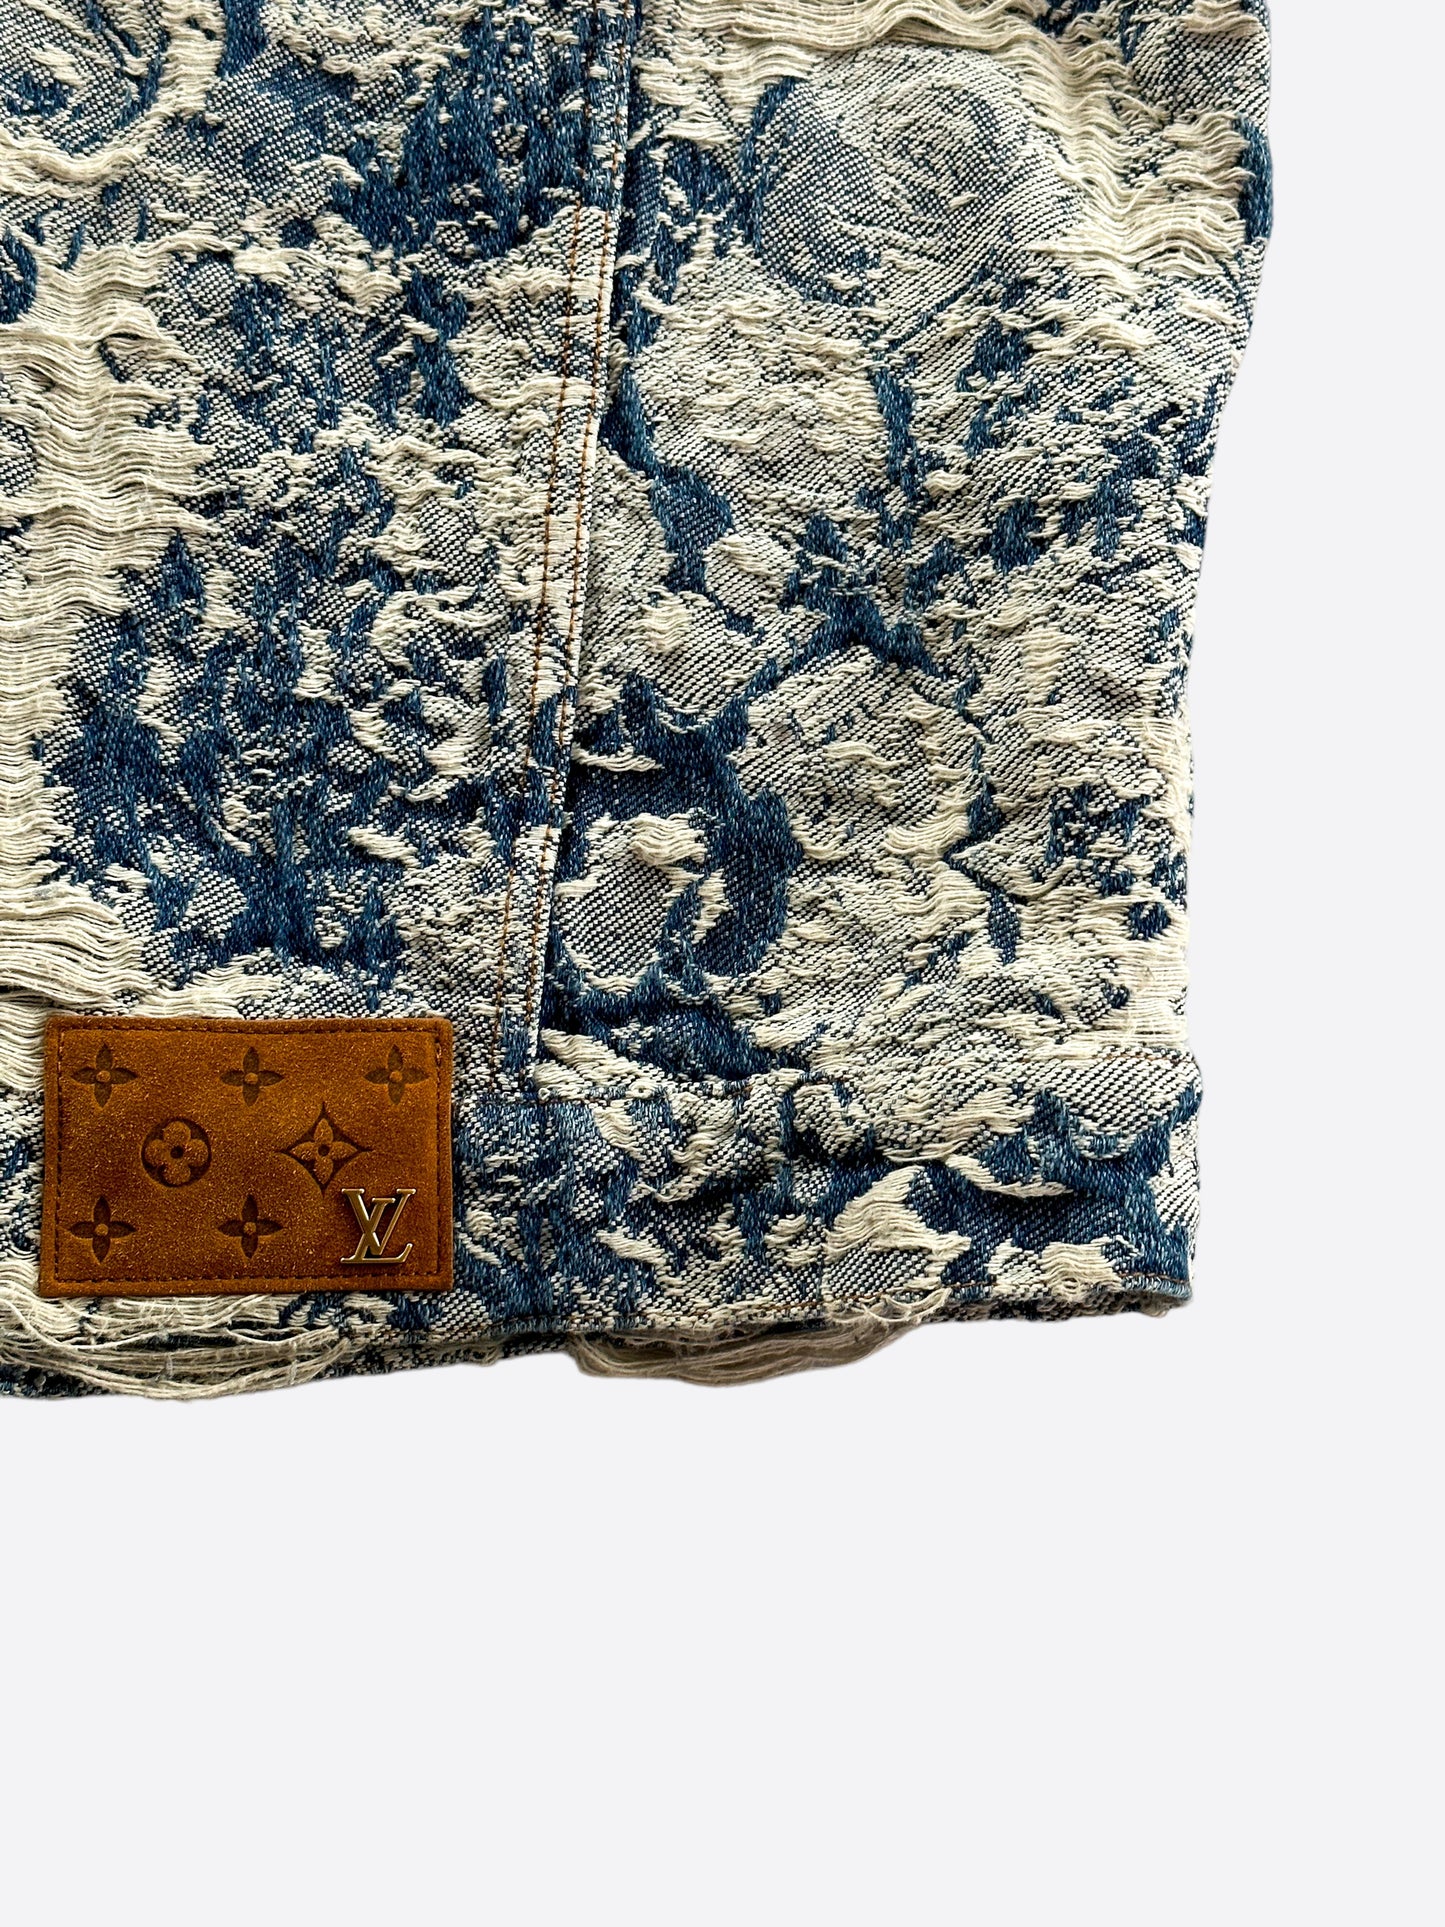 Louis Vuitton Repurposed Jeans Jacket – Create Fashion Now